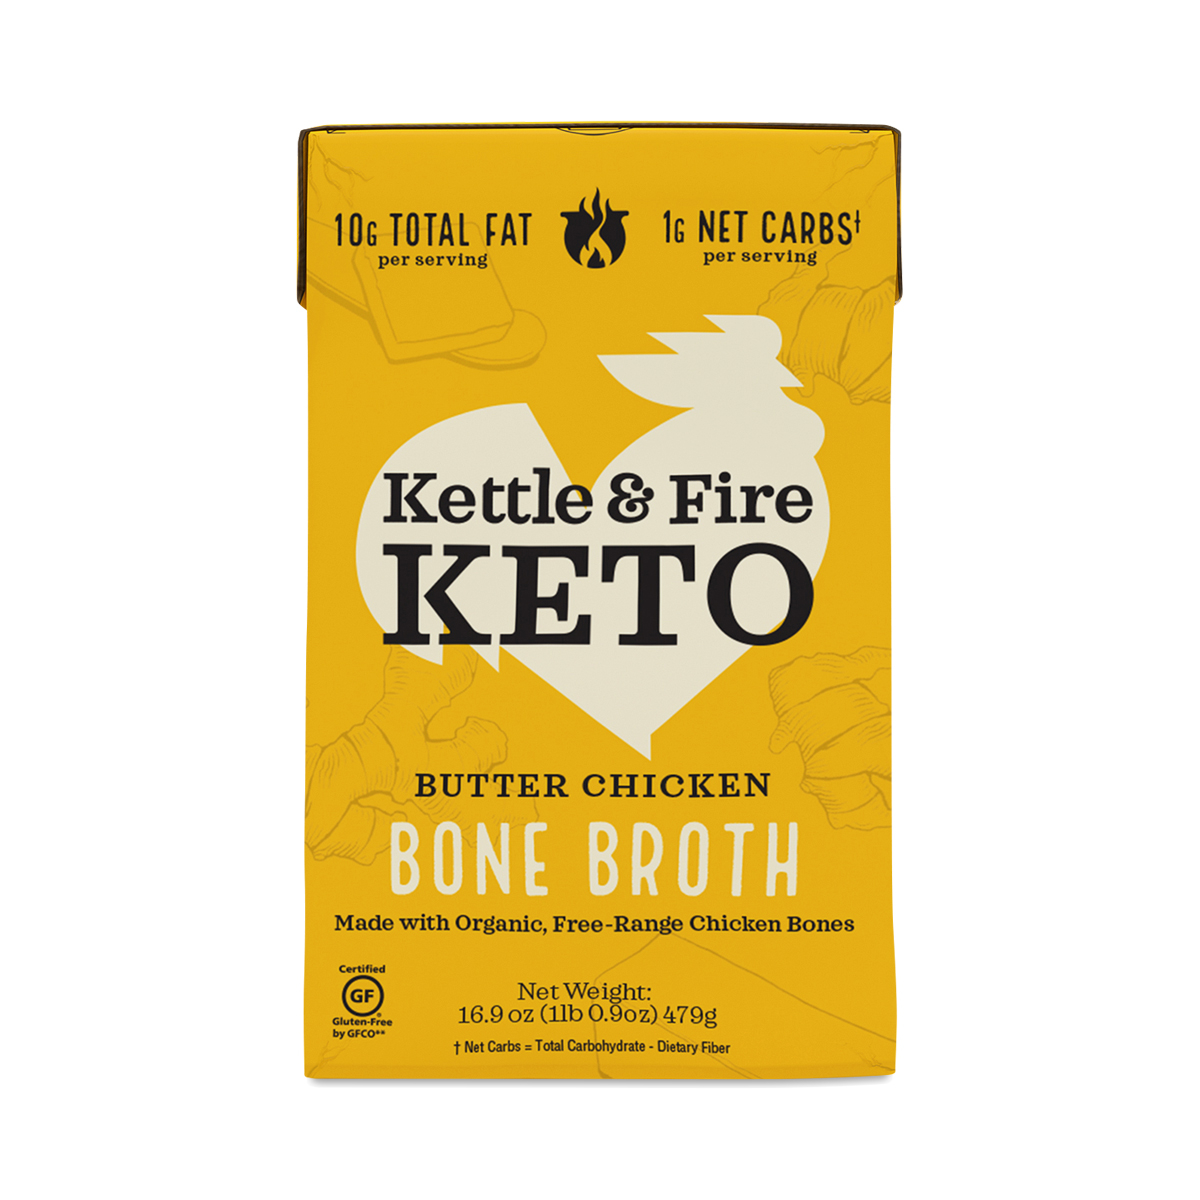 Kettle & Fire Keto Bone Broth, Butter Chicken 16.9 oz carton